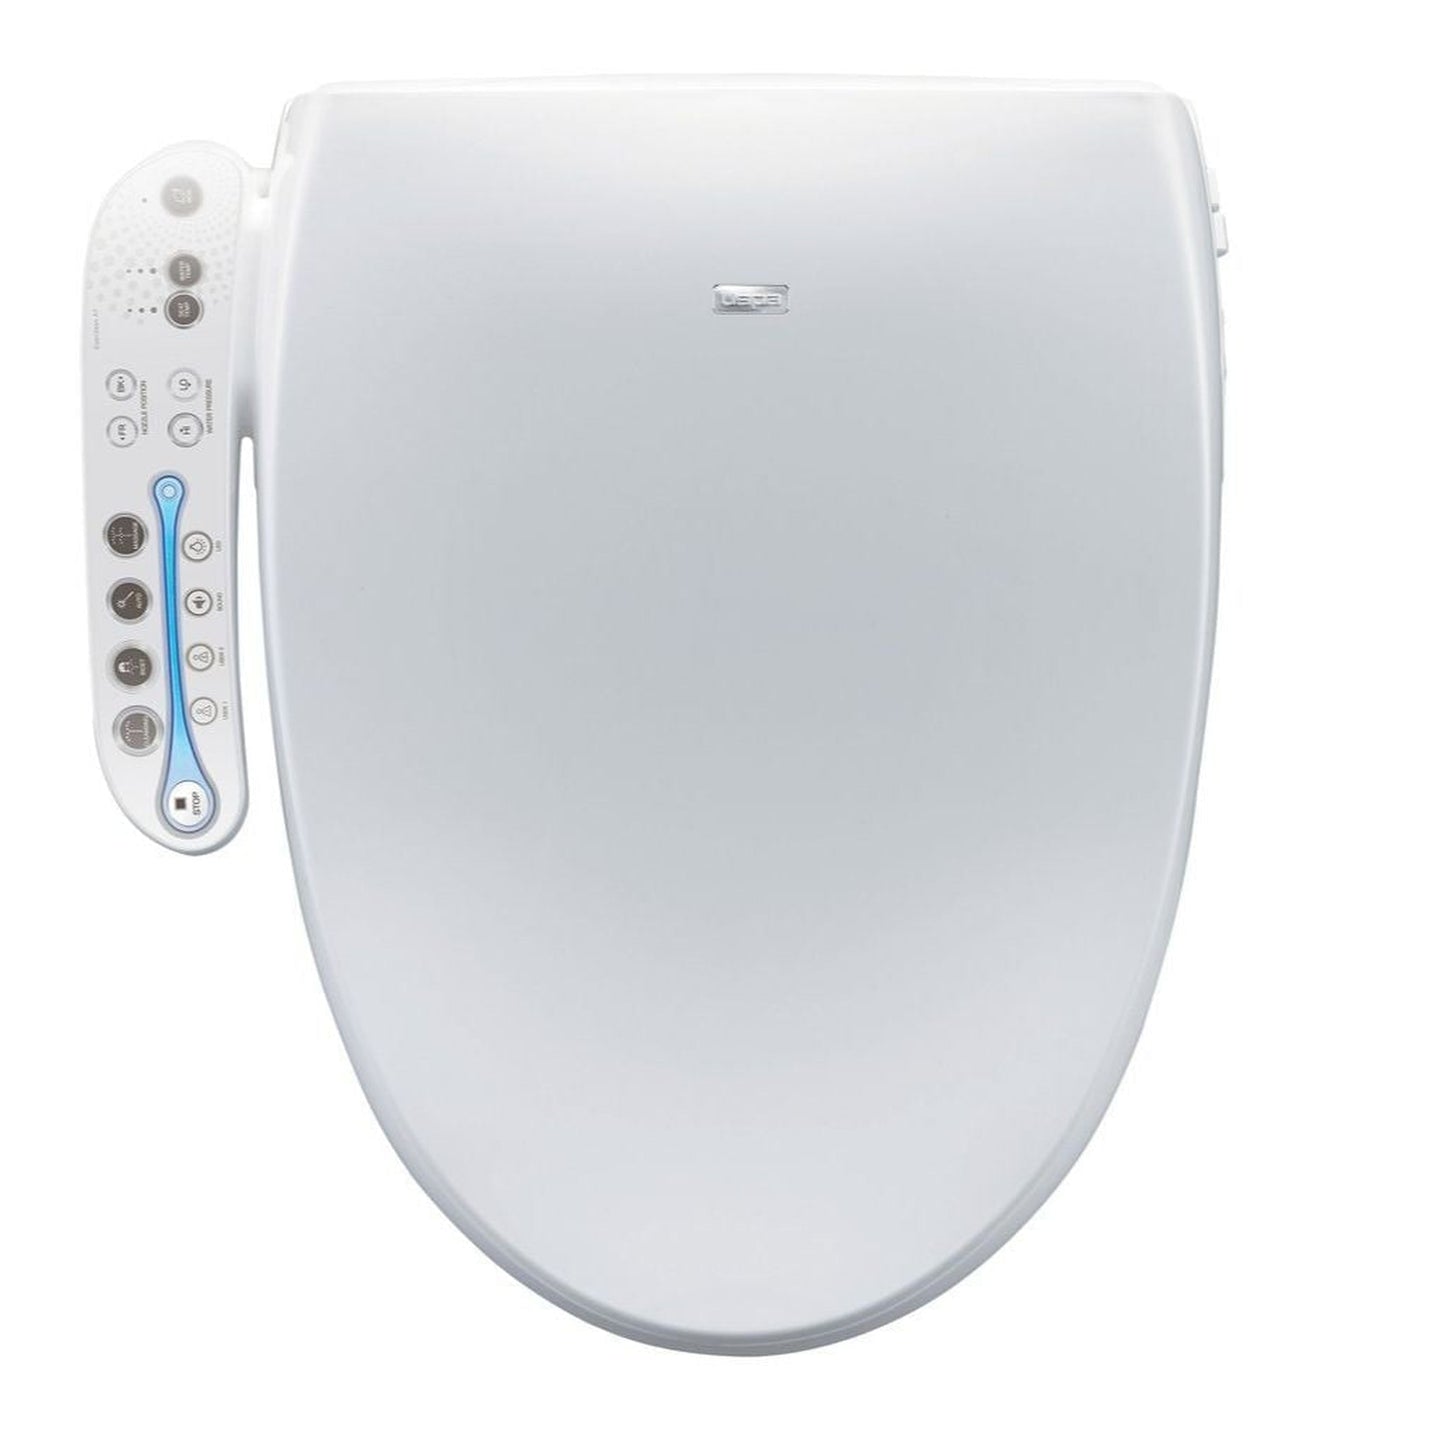 Bio Bidet A7 Aura 19" White Elongated Advanced Bidet Toilet Seat With Side Control Panel